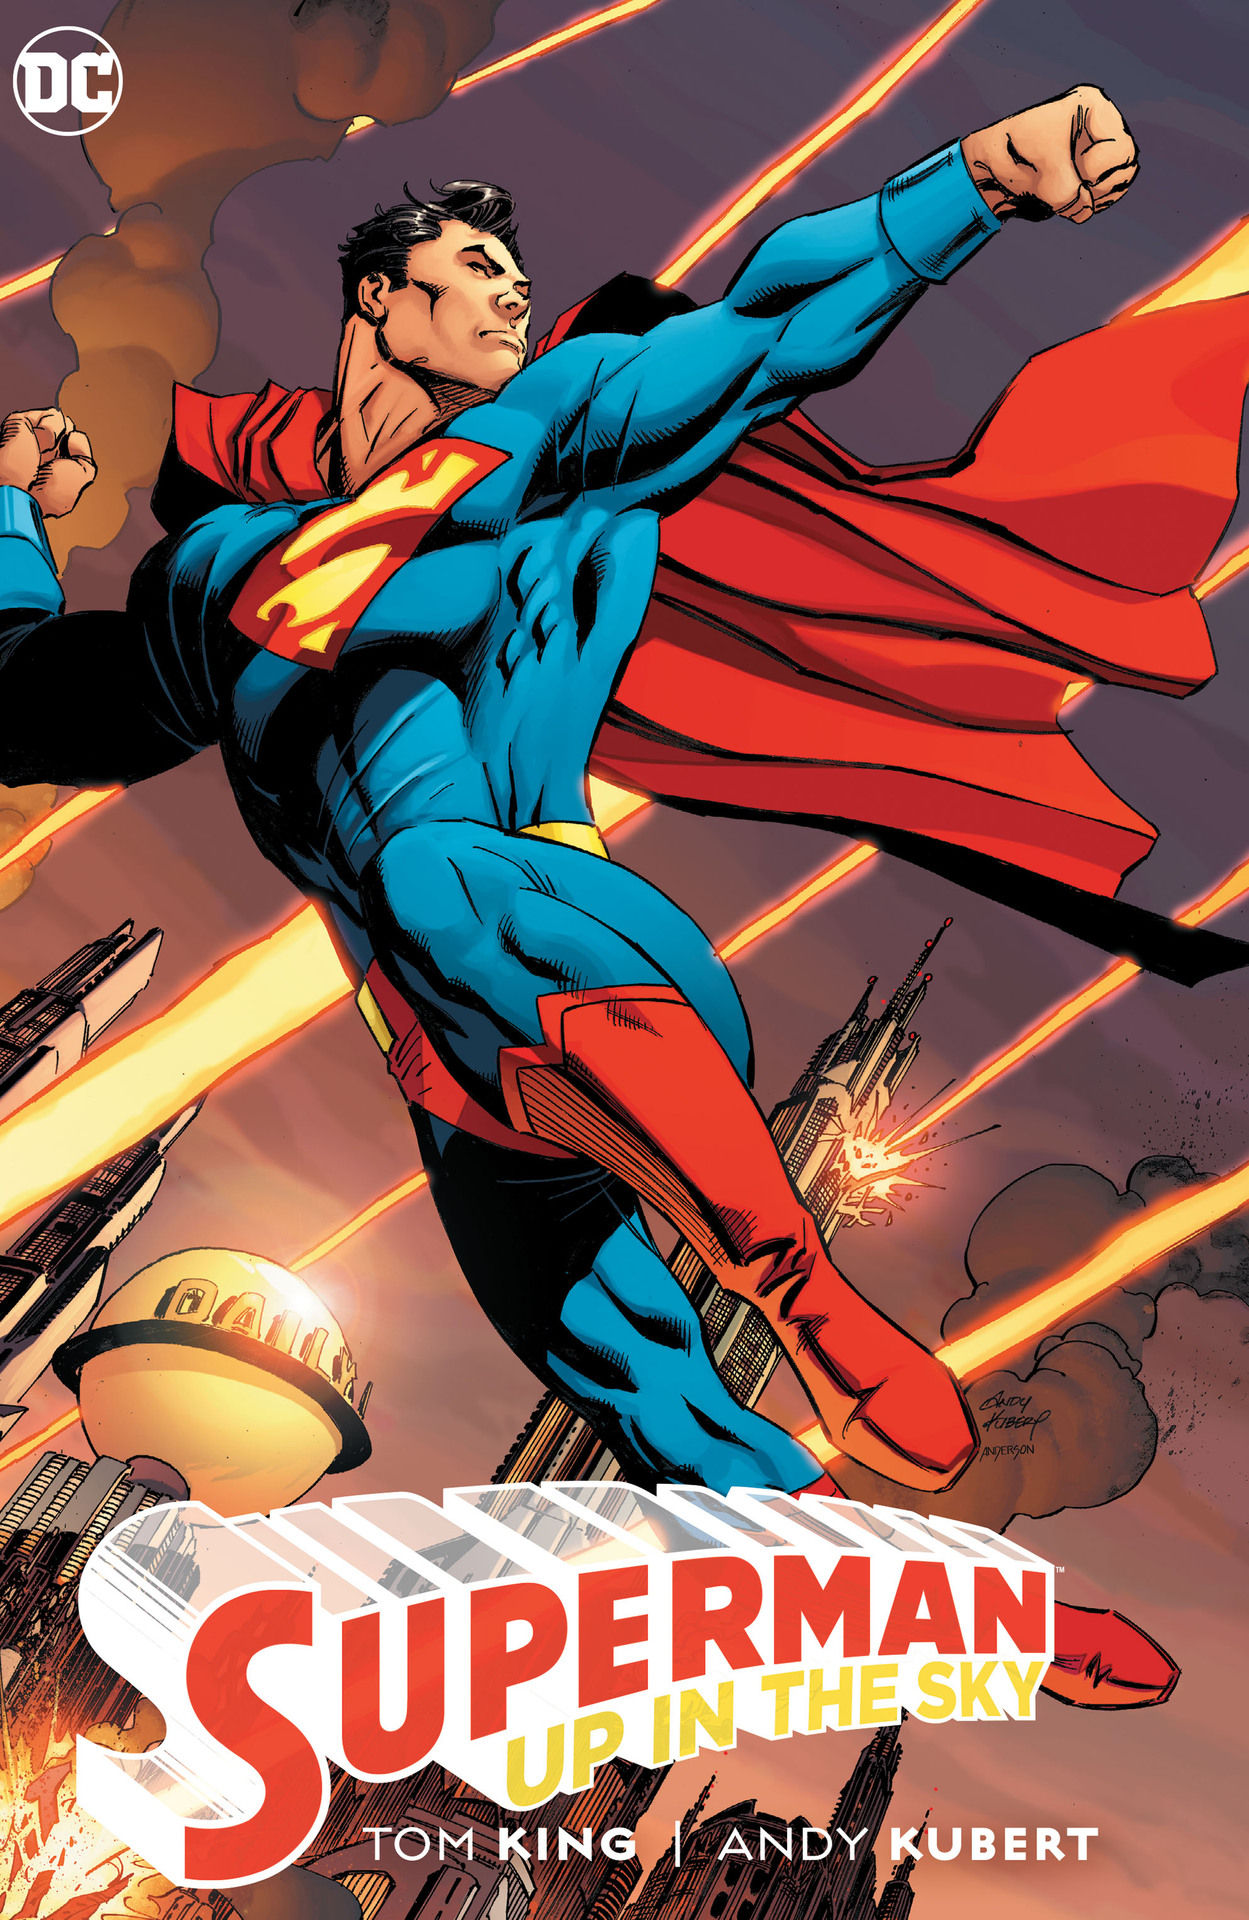 Andy Kubert, Tom King: Superman: Up in the Sky (2021, DC Comics)